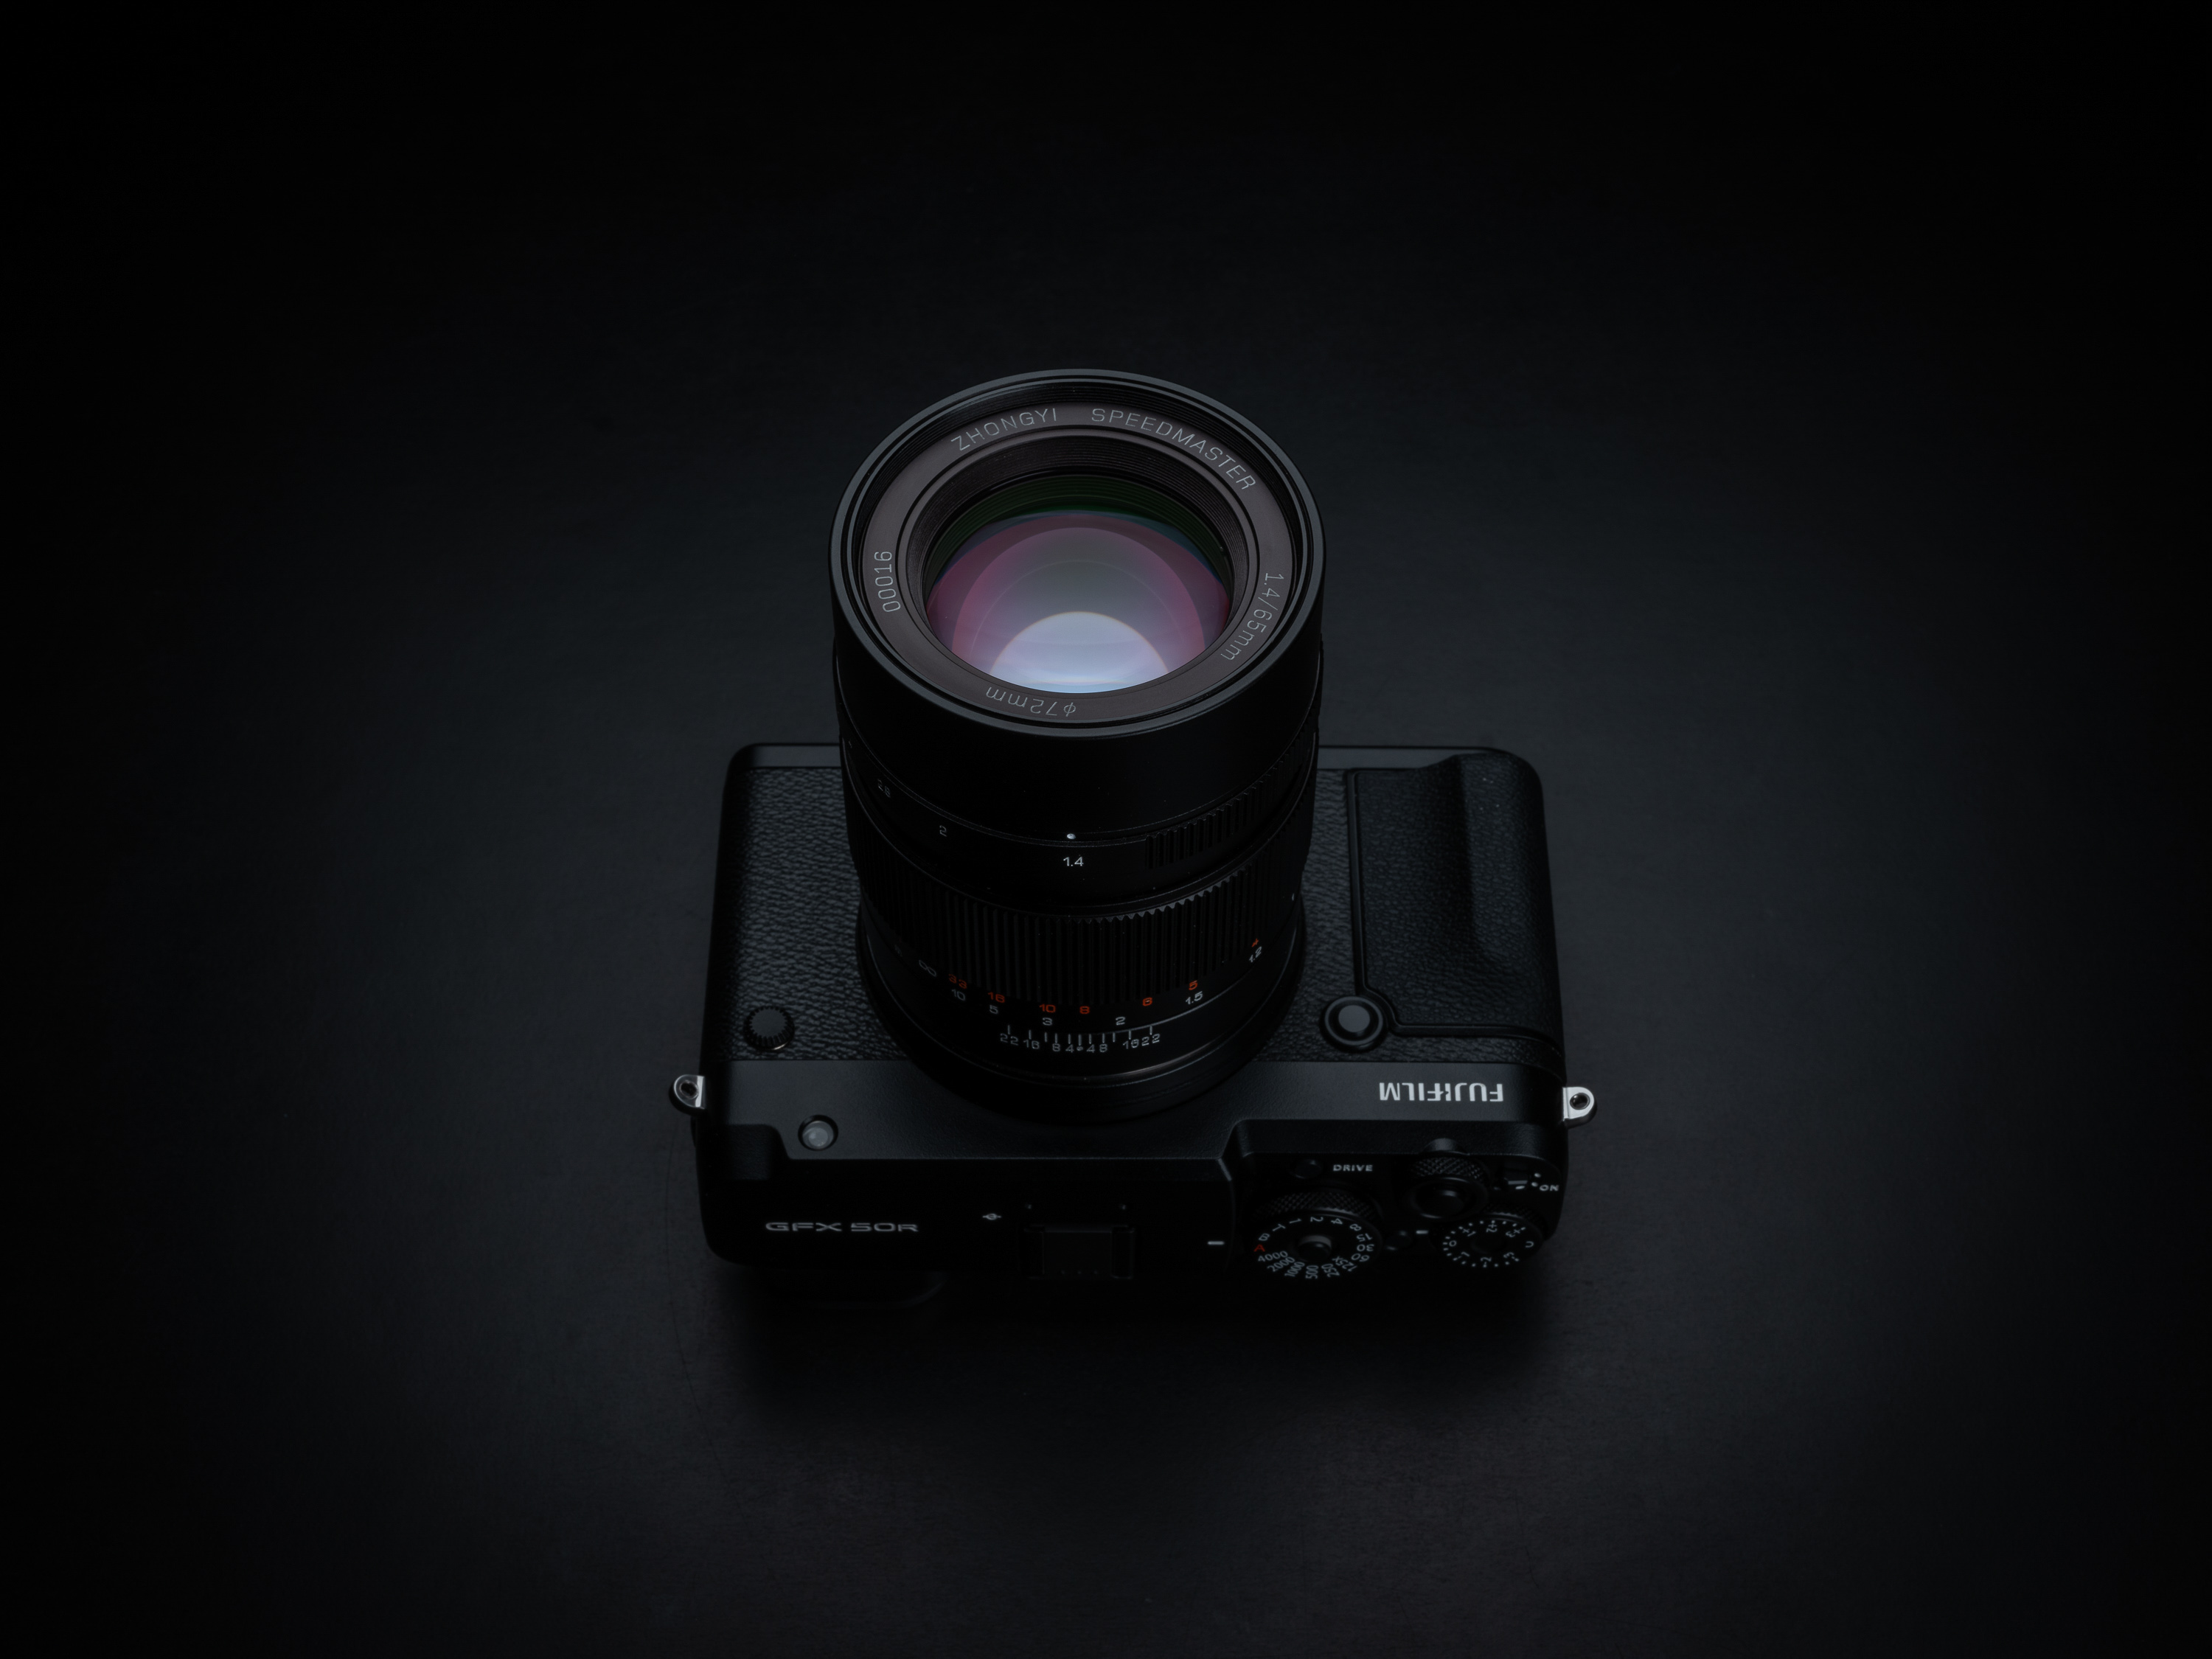 The Mitakon Speedmaster 65mm f1.4 Gives the Fujifilm GFX a 51mm f1.1 Equivalent Lens